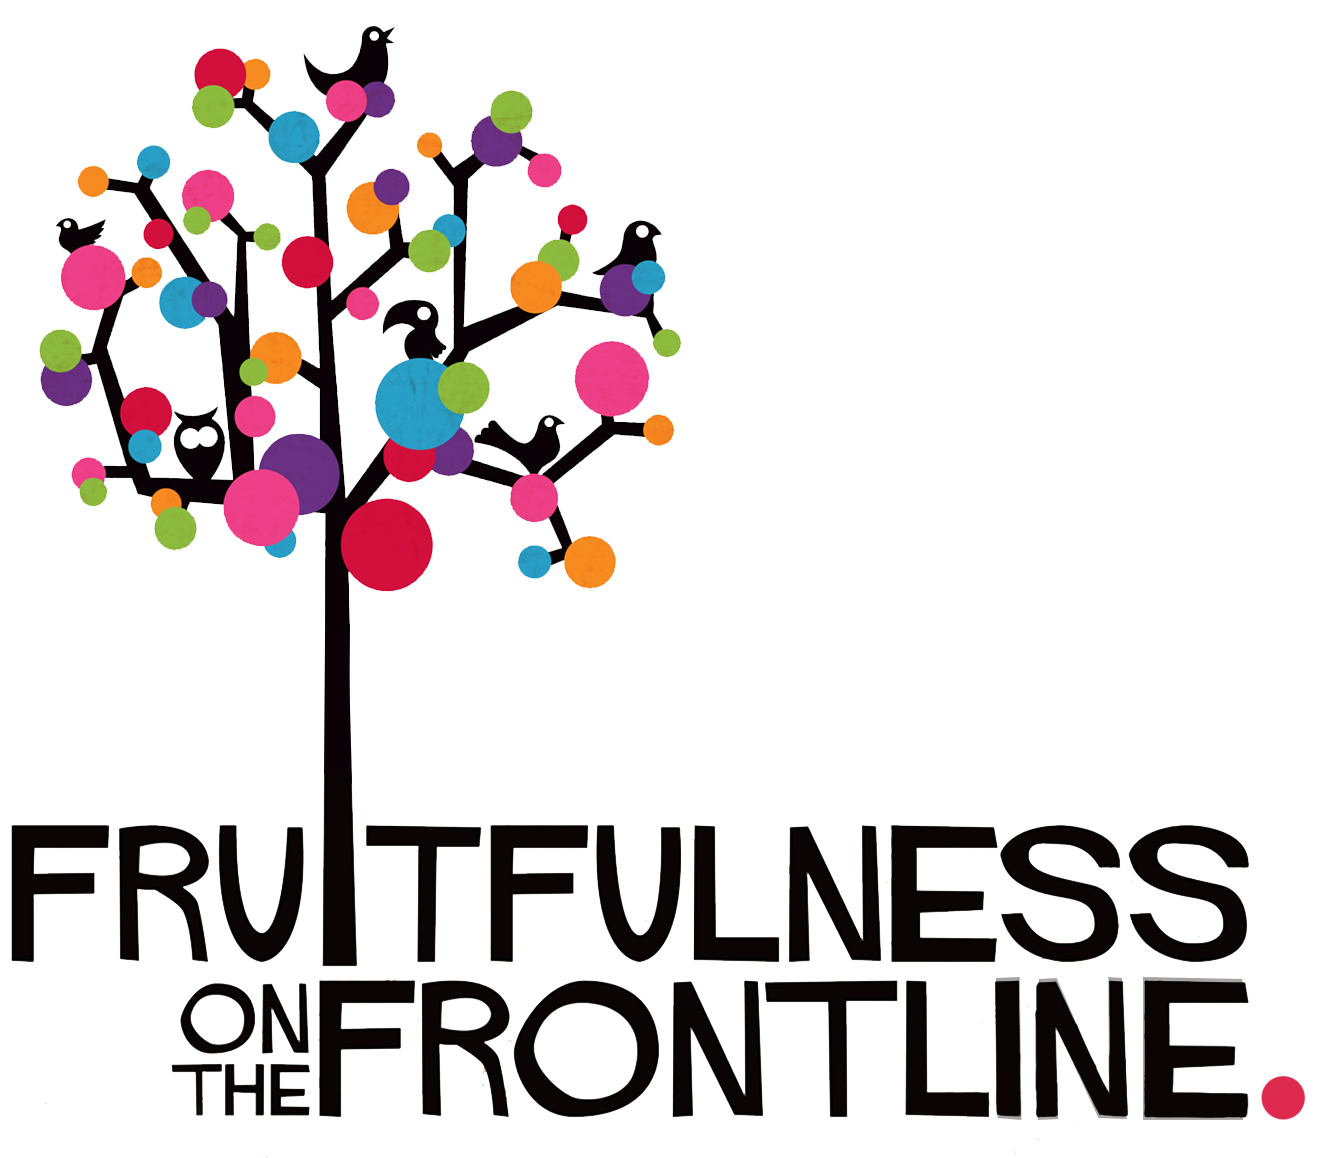 Fruitfulness on the frontline